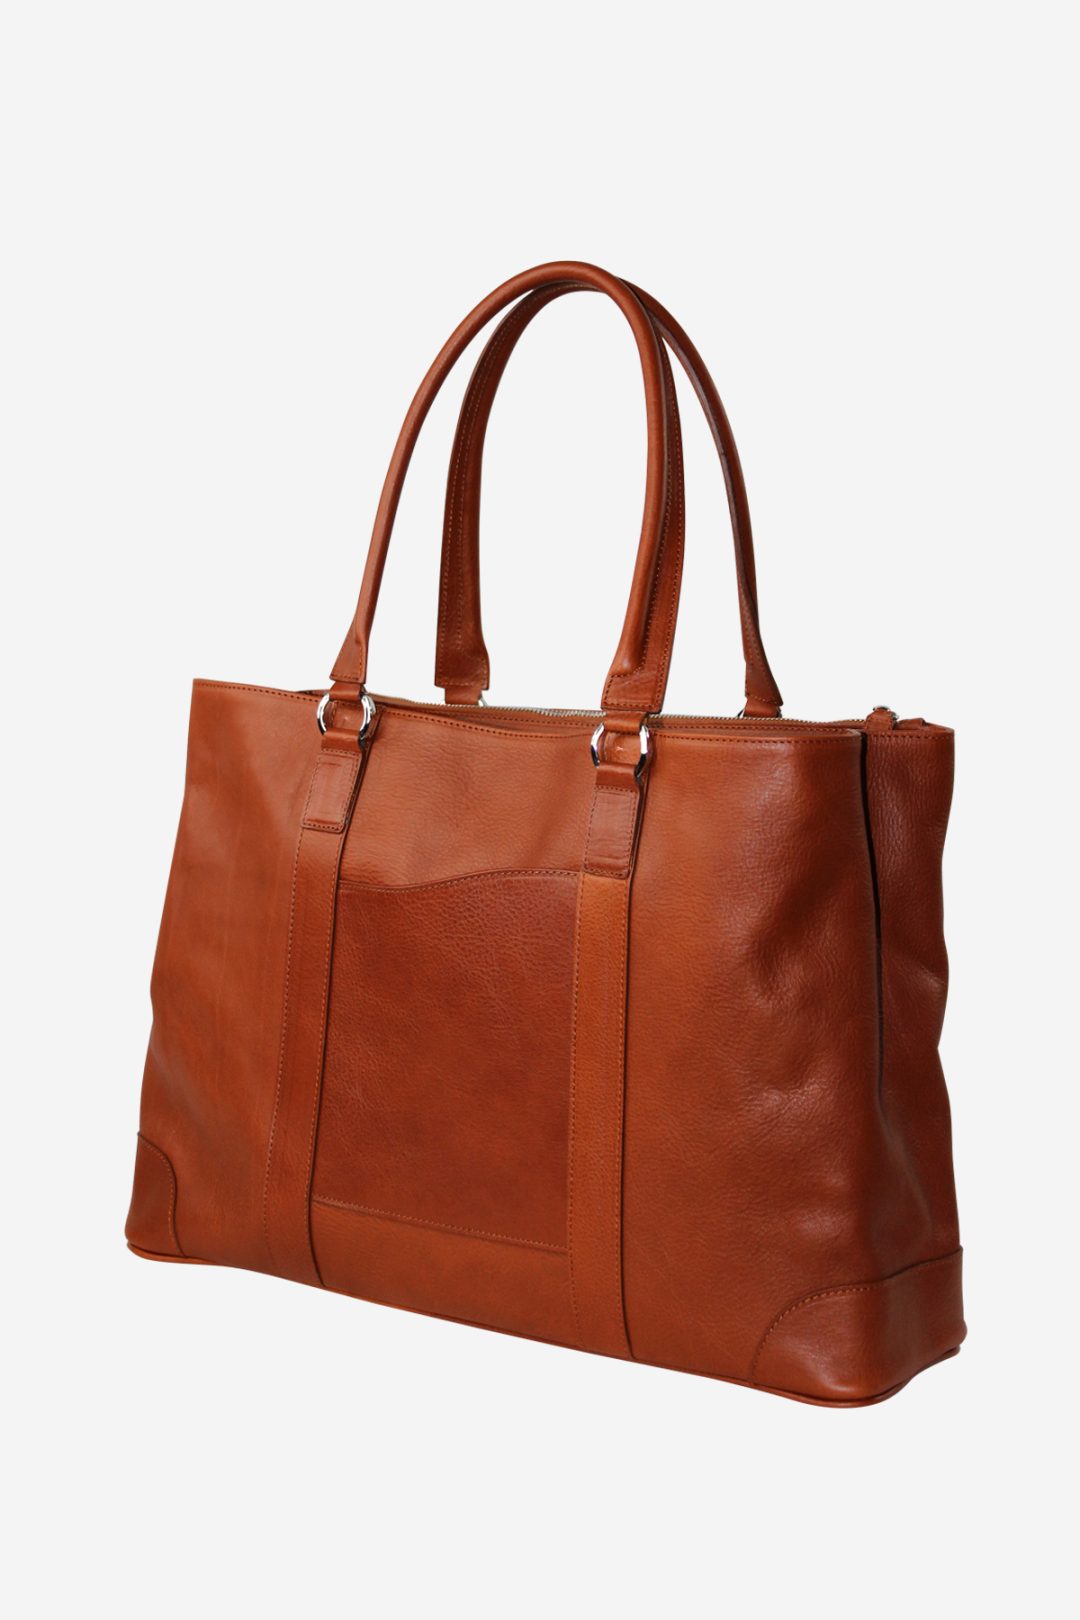 Luxury Leather Shoulder  Handbags  Mackenzie Leather Edinburgh